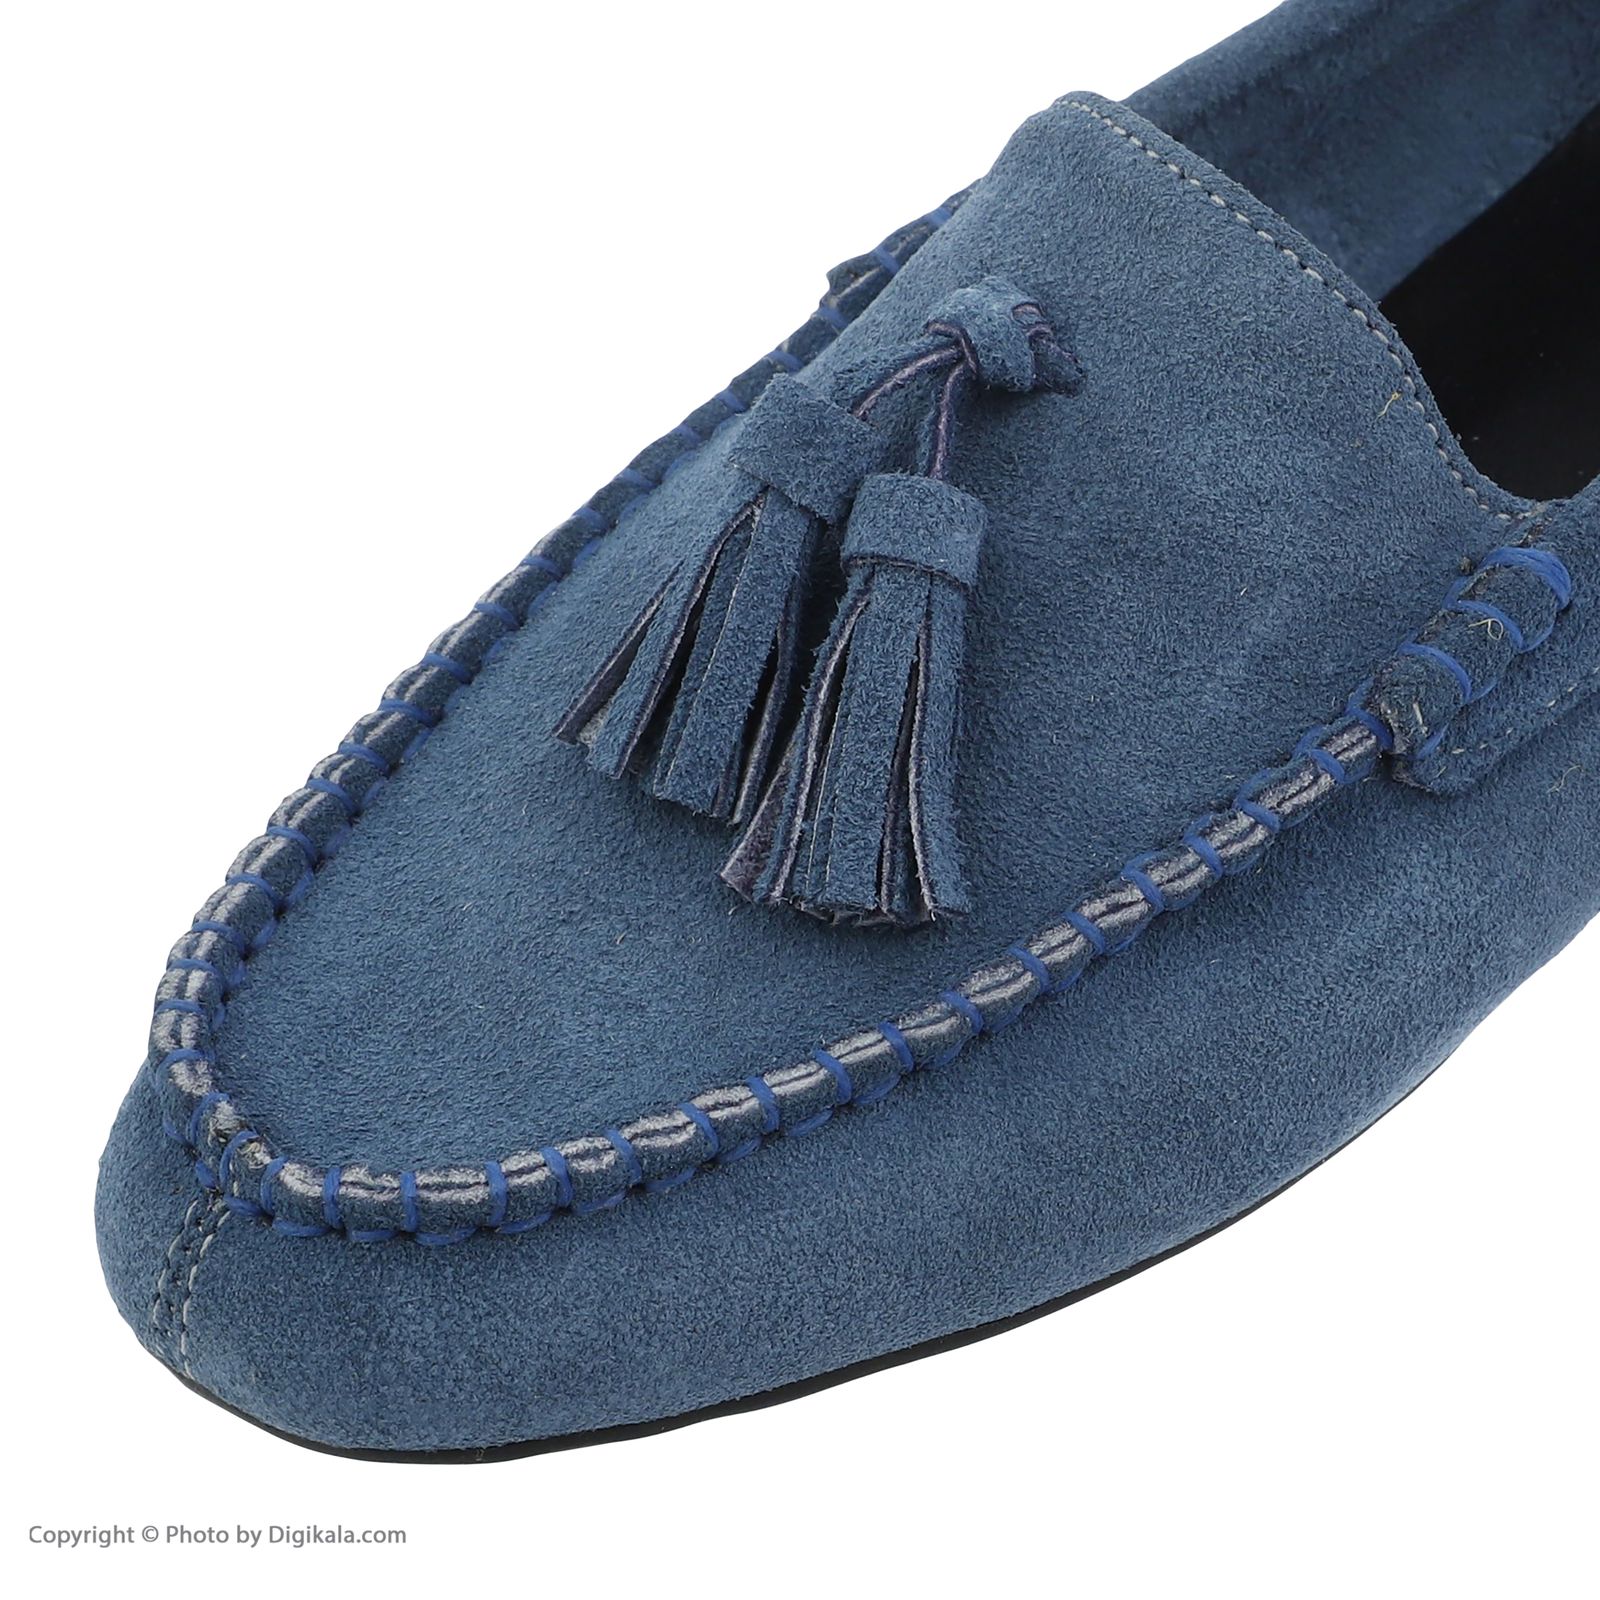  کفش کالج زنانه شوپا مدل skb1000sky blue -  - 4